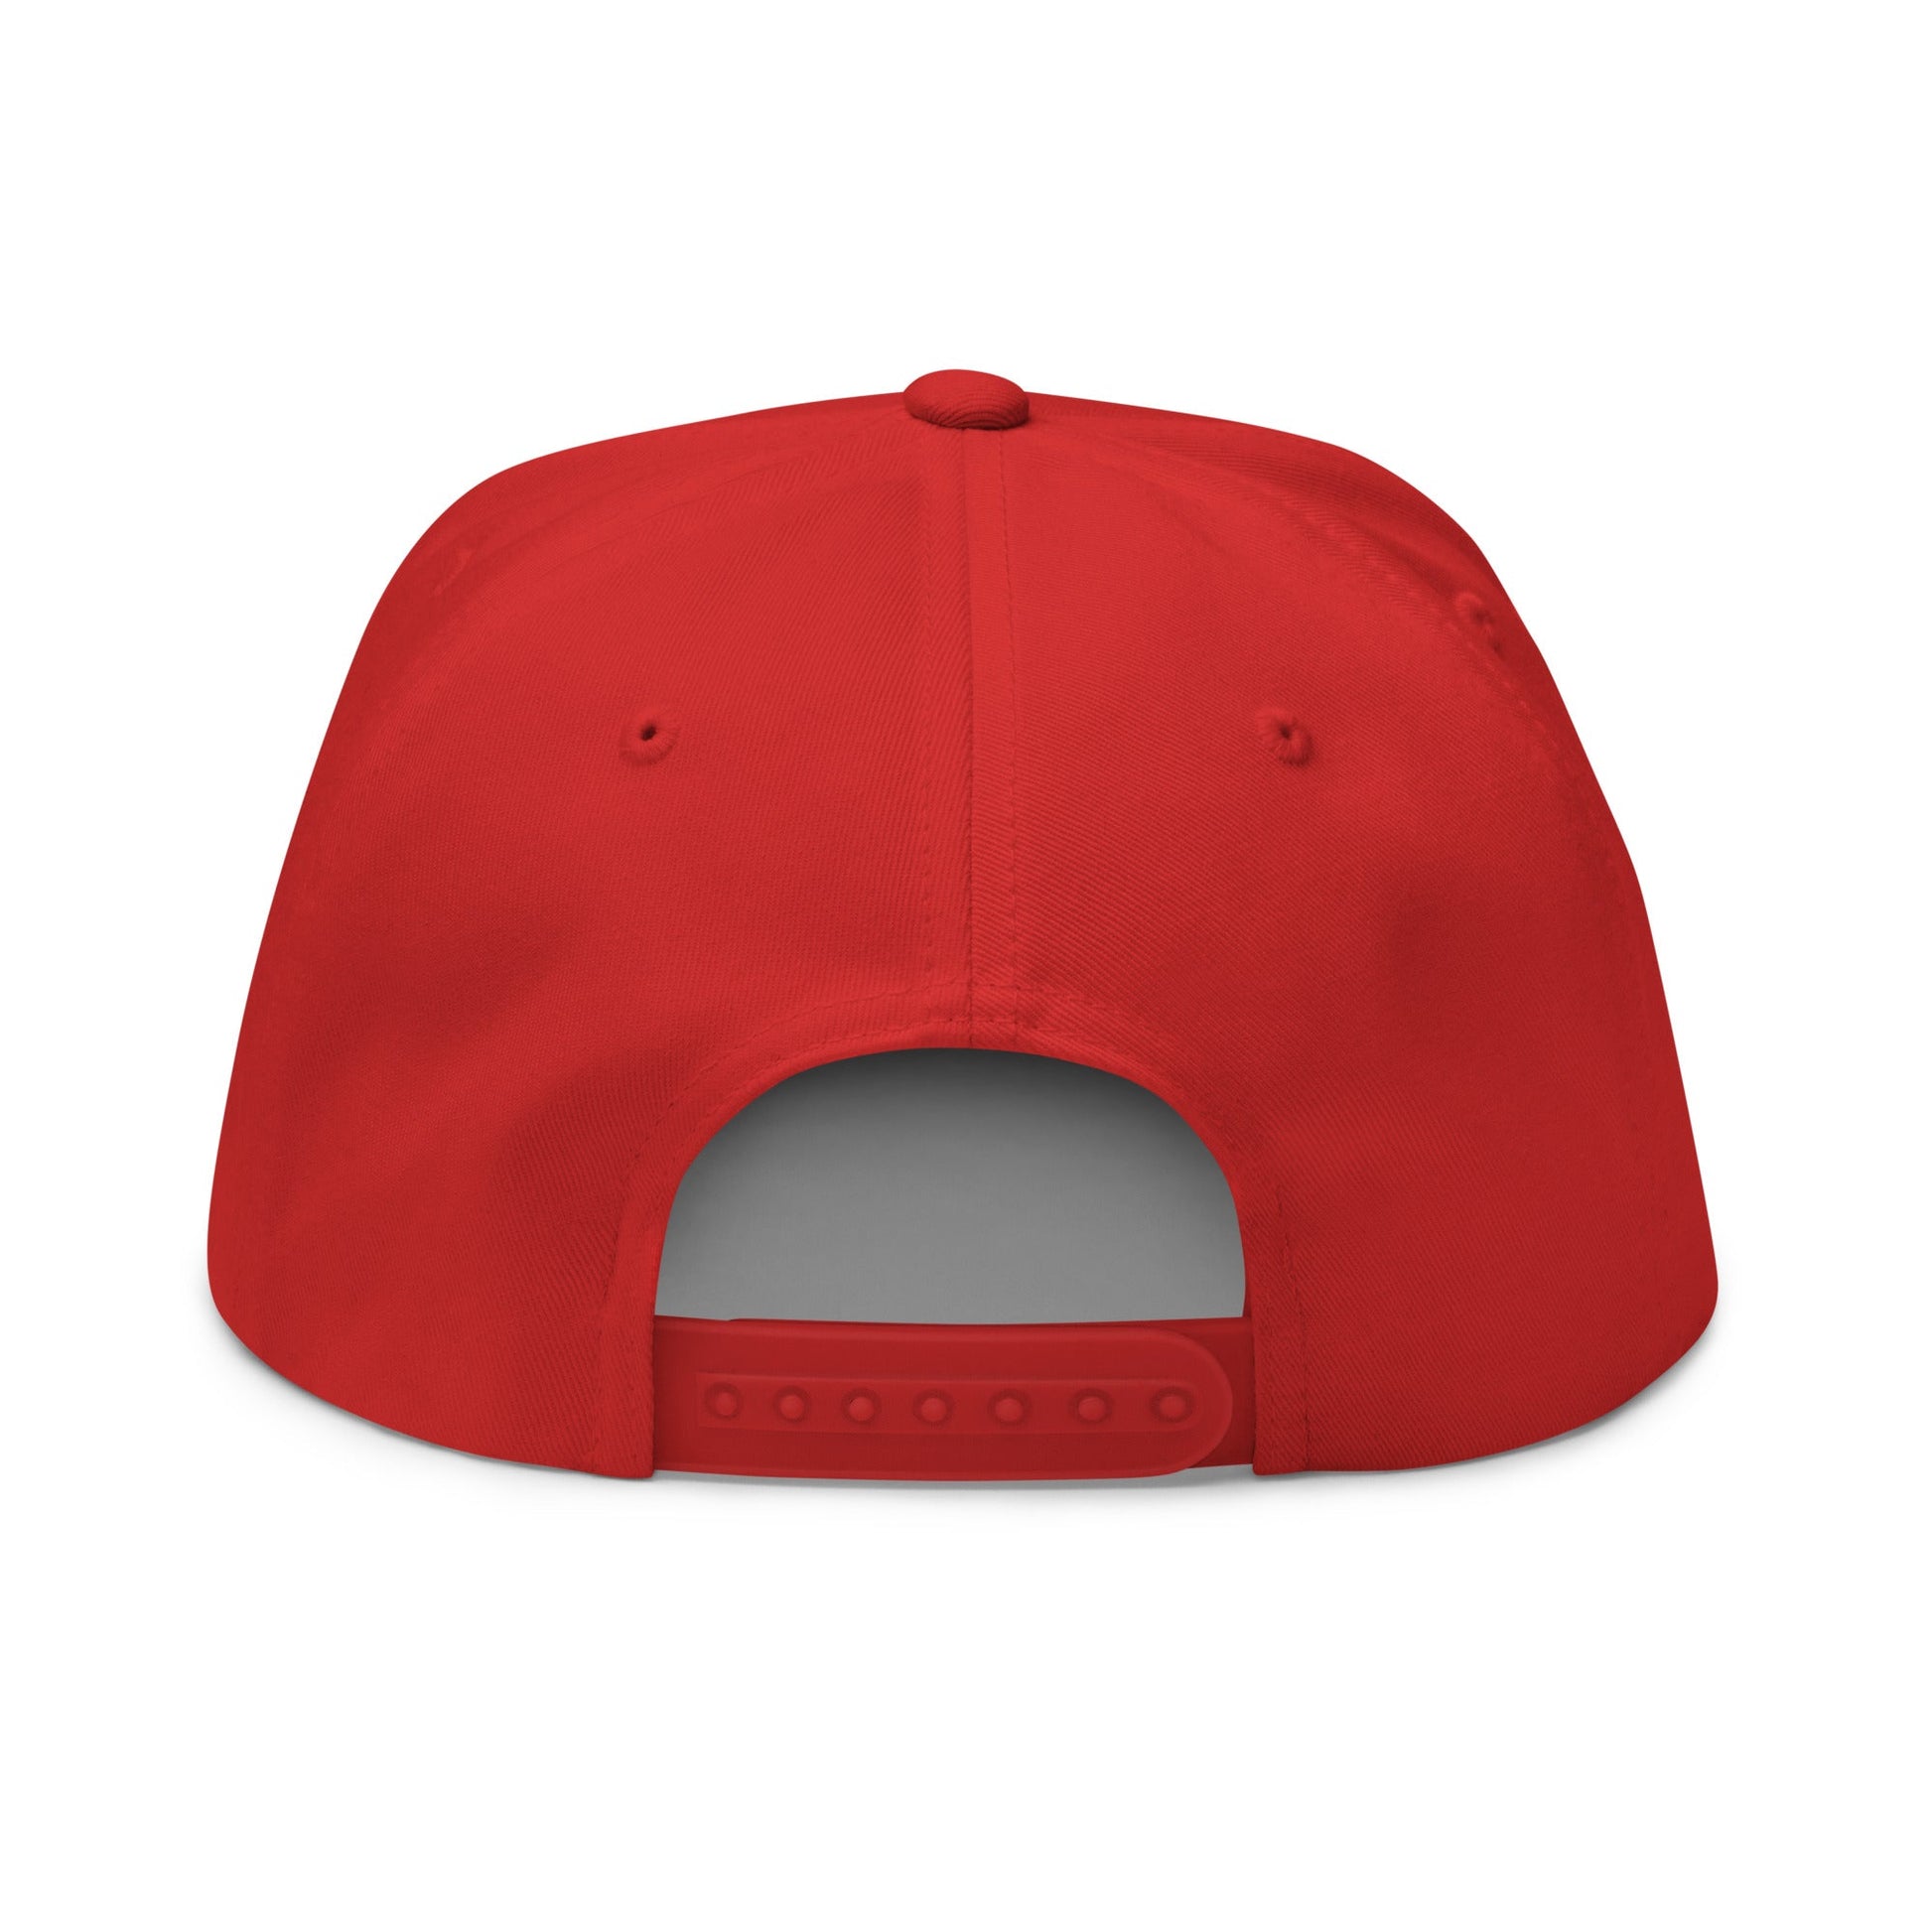 Make 4th of July Great Again Funny Flat Bill Brim Snapback Hat Red